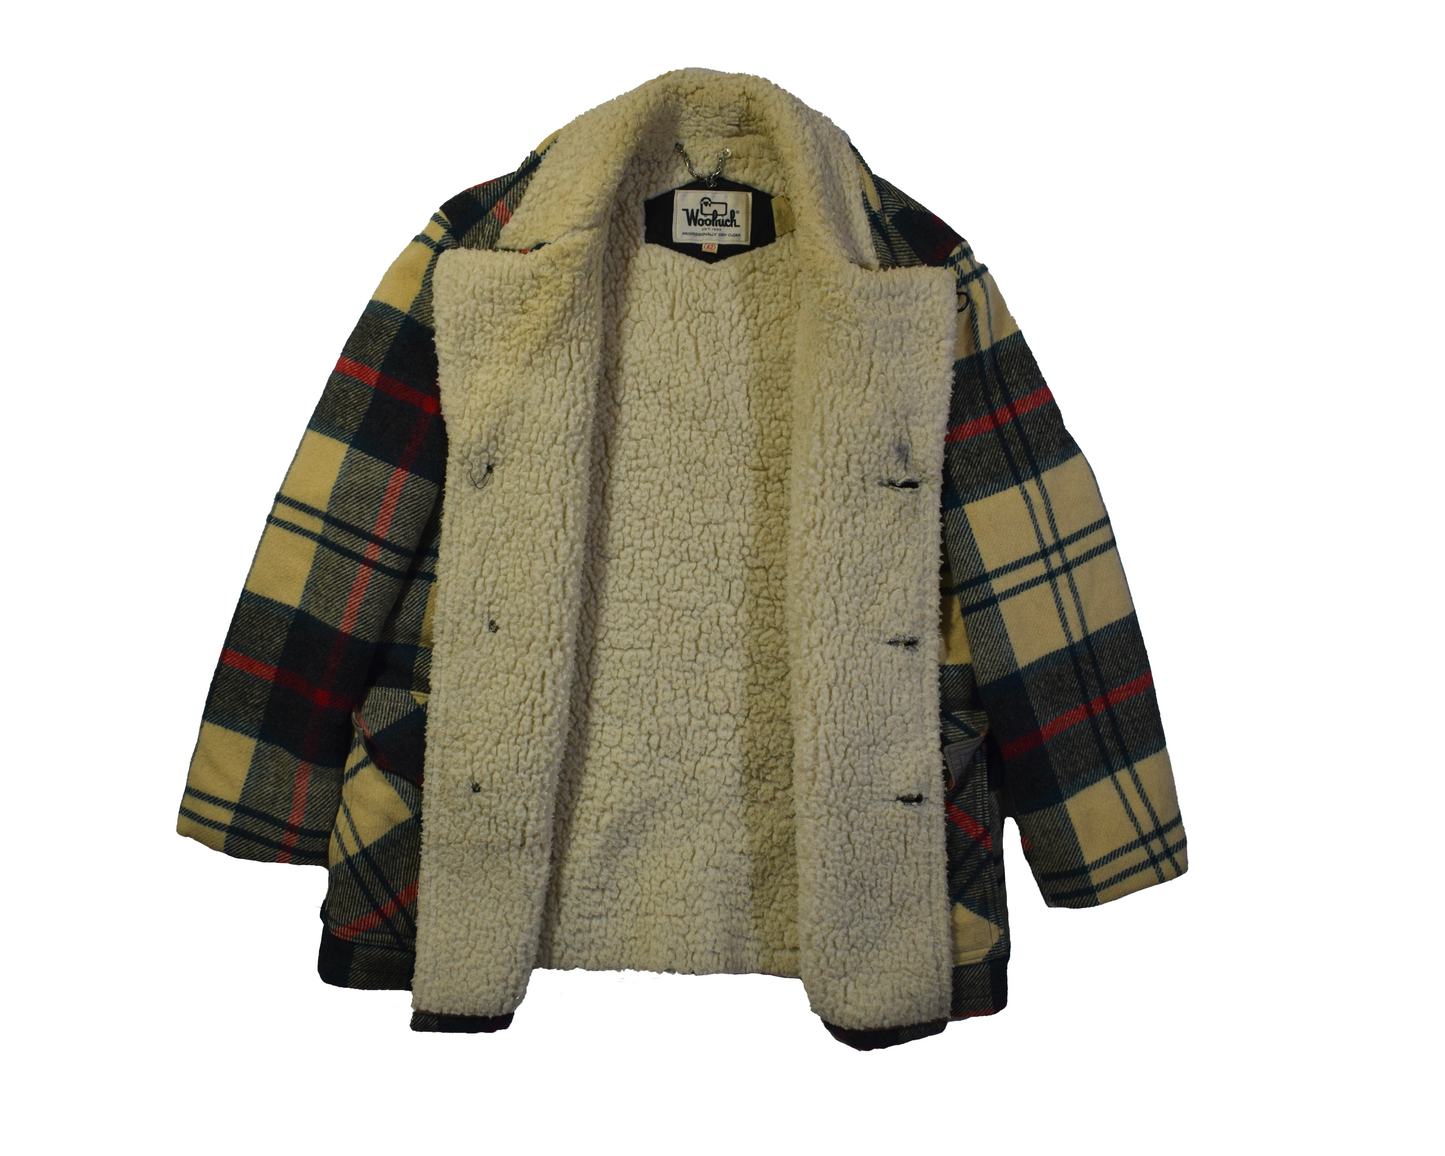 Vintage Woolruch Tartan Jacket